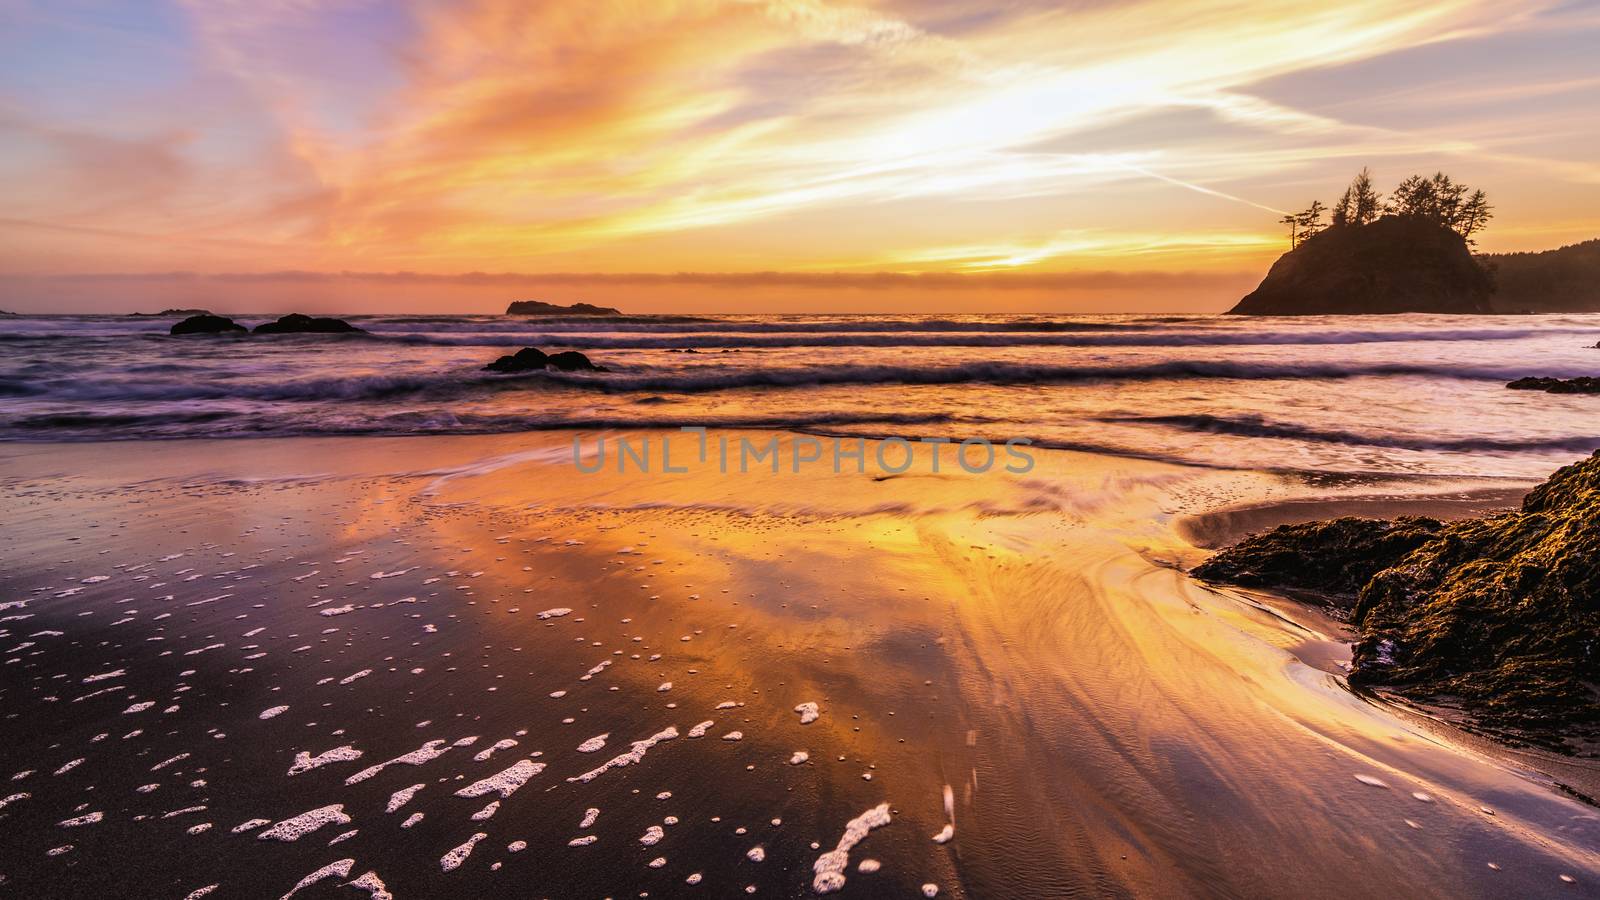 Sunset at a Rocky Beach, Northern California Coast by backyard_photography